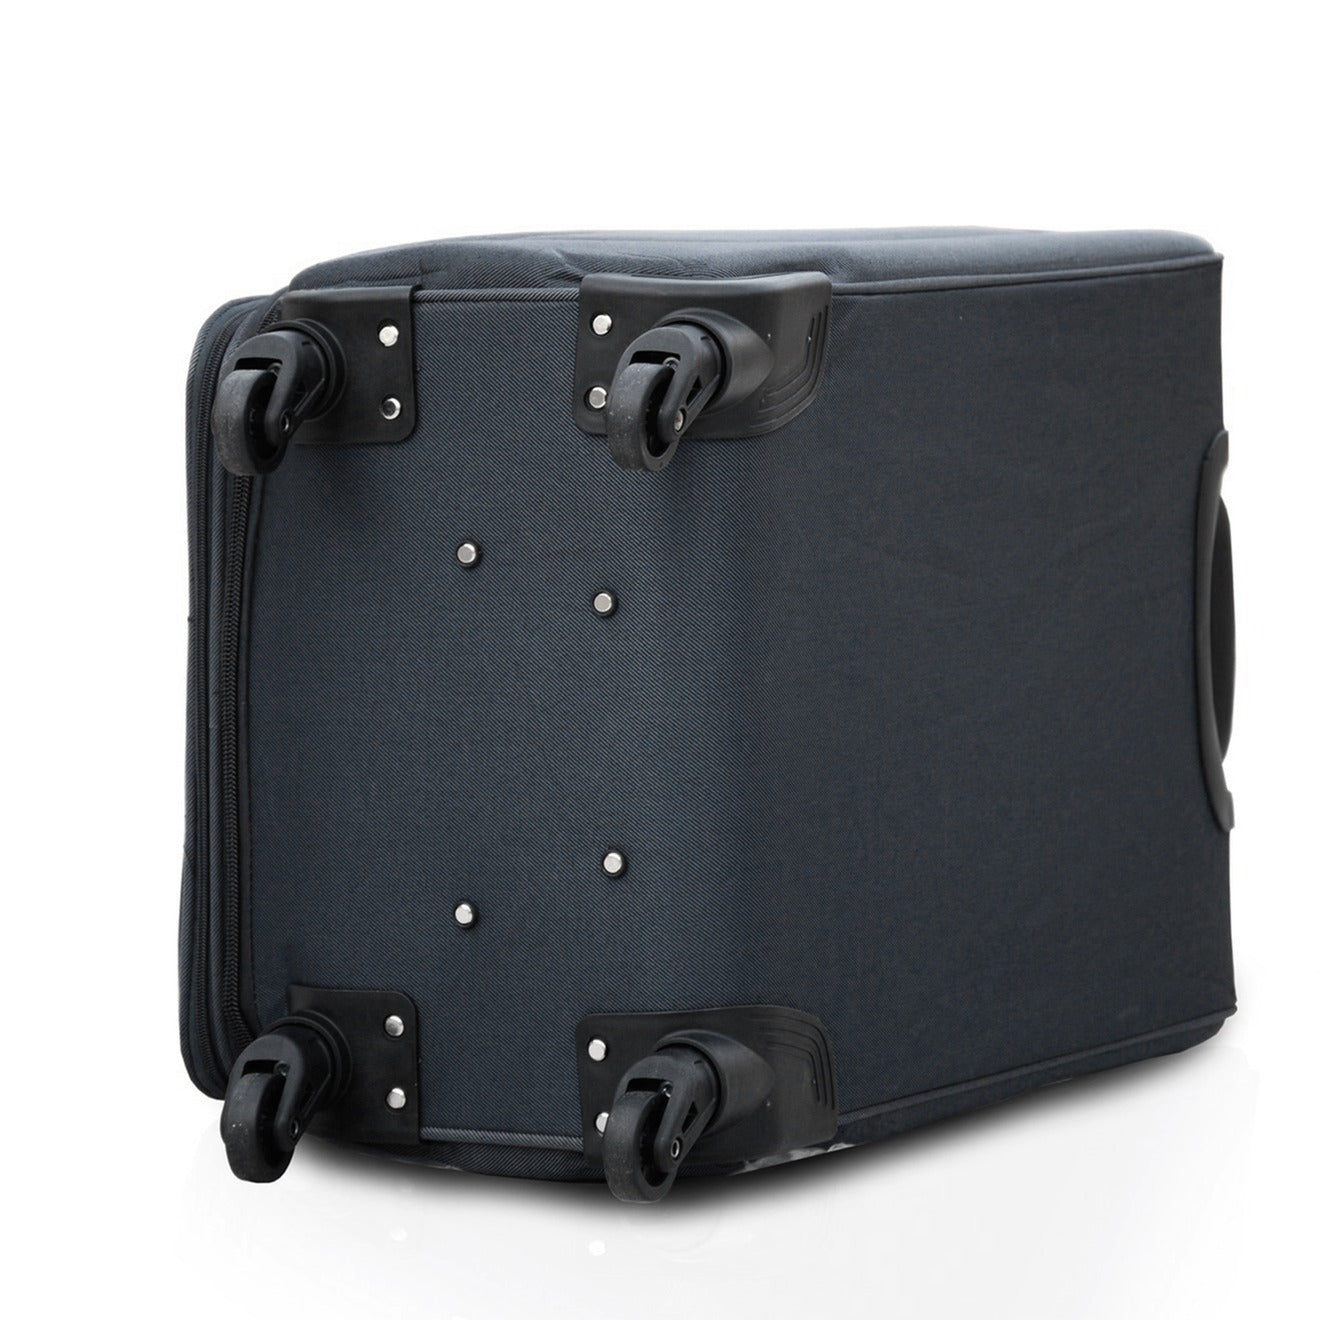 28" Black Colour SJ JIAN 4 Wheel Luggage Lightweight Soft Material Trolley Bag Zaappy.com